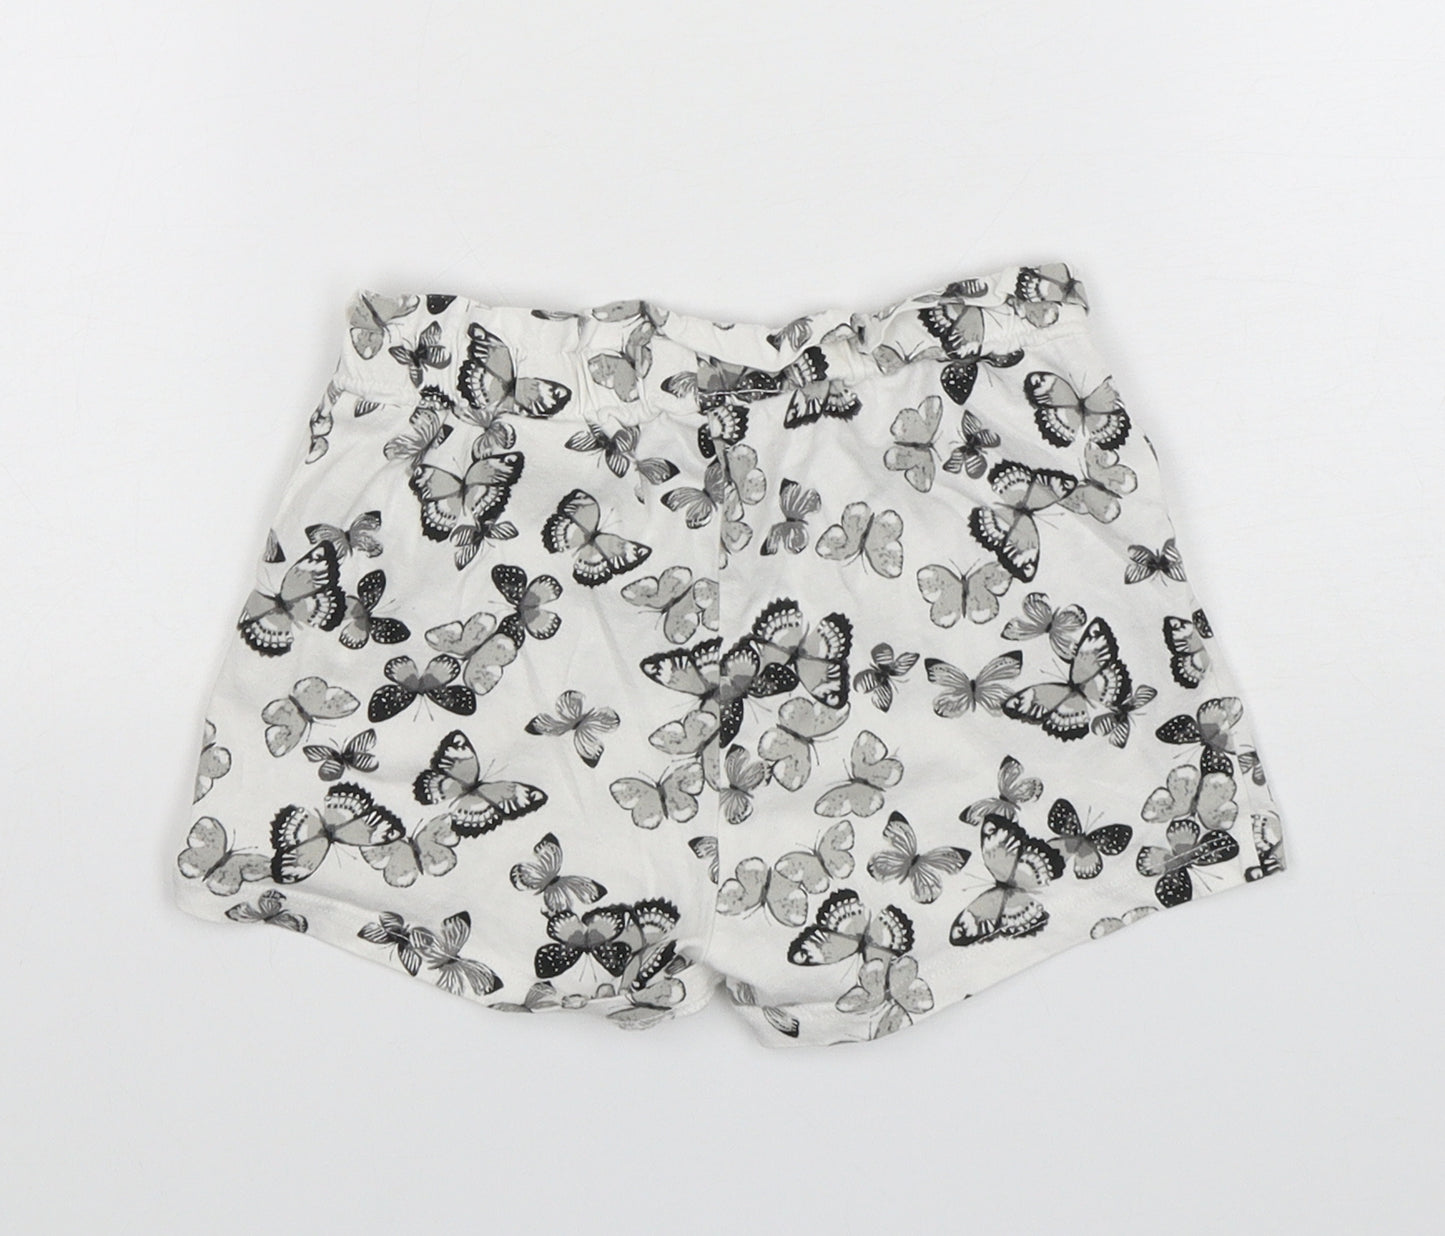 H&M Girls Multicoloured Animal Print Cotton Sweat Shorts Size 5-6 Years  Regular